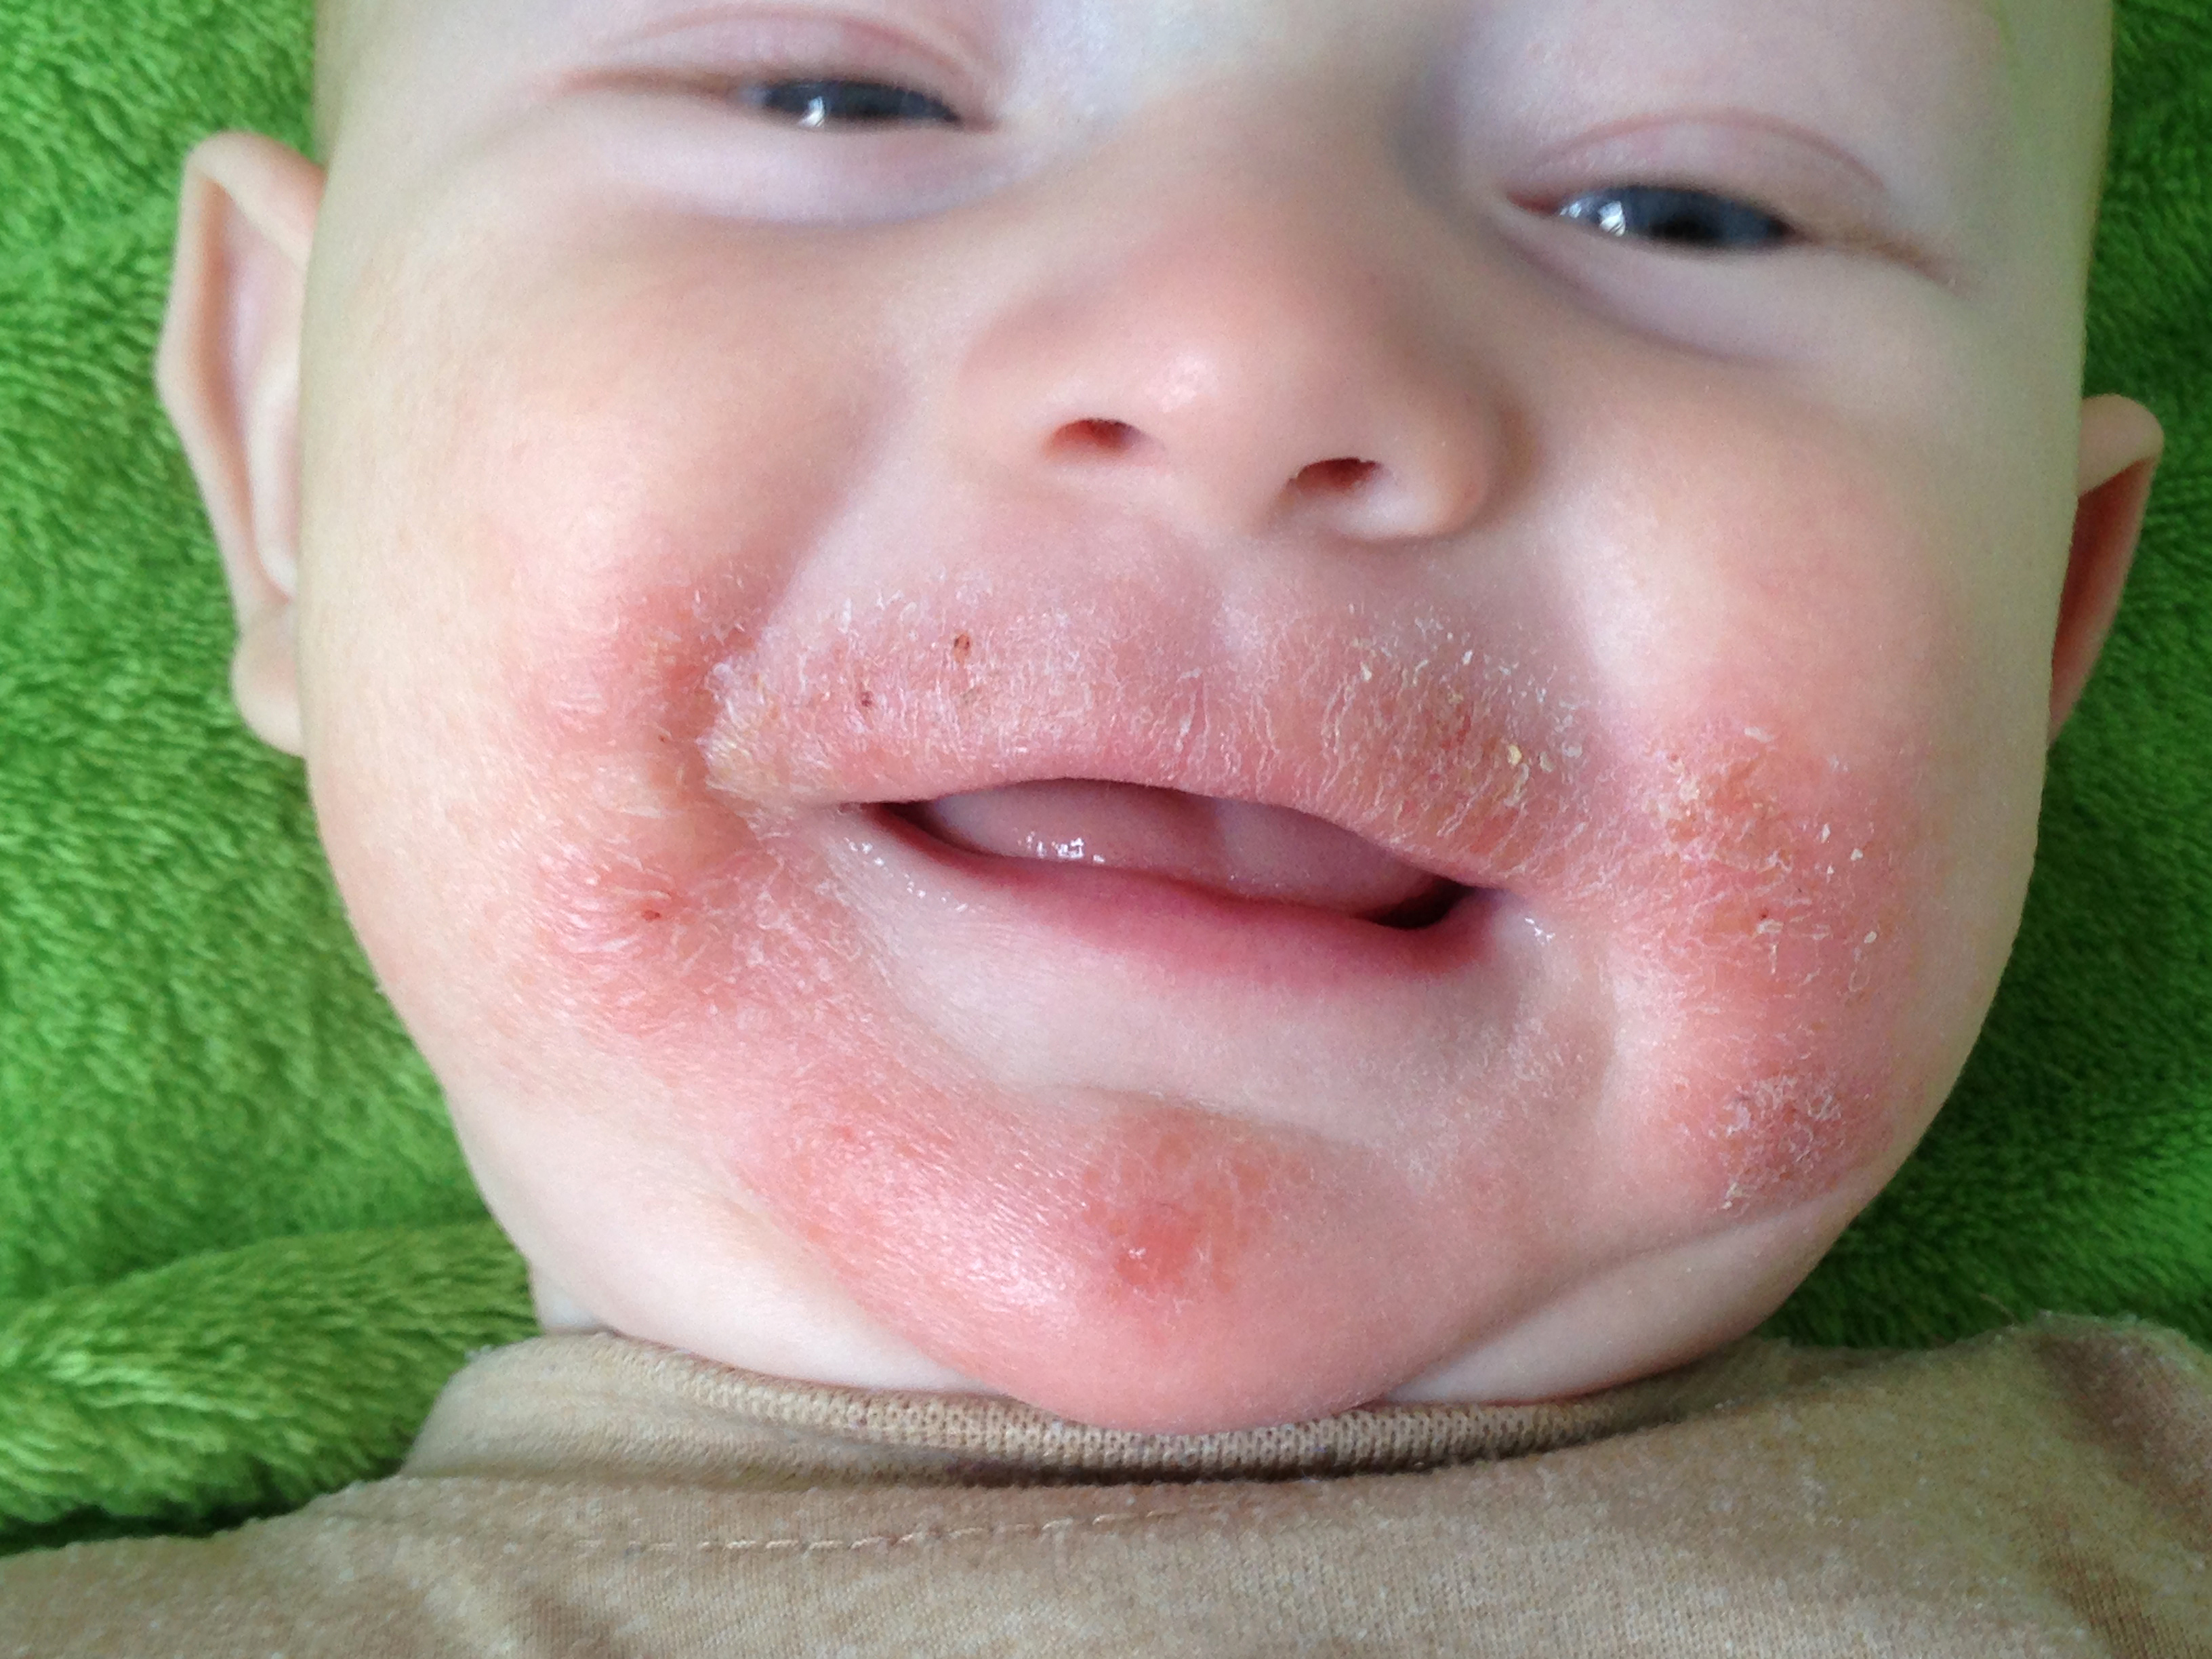 Child with atopic eczema